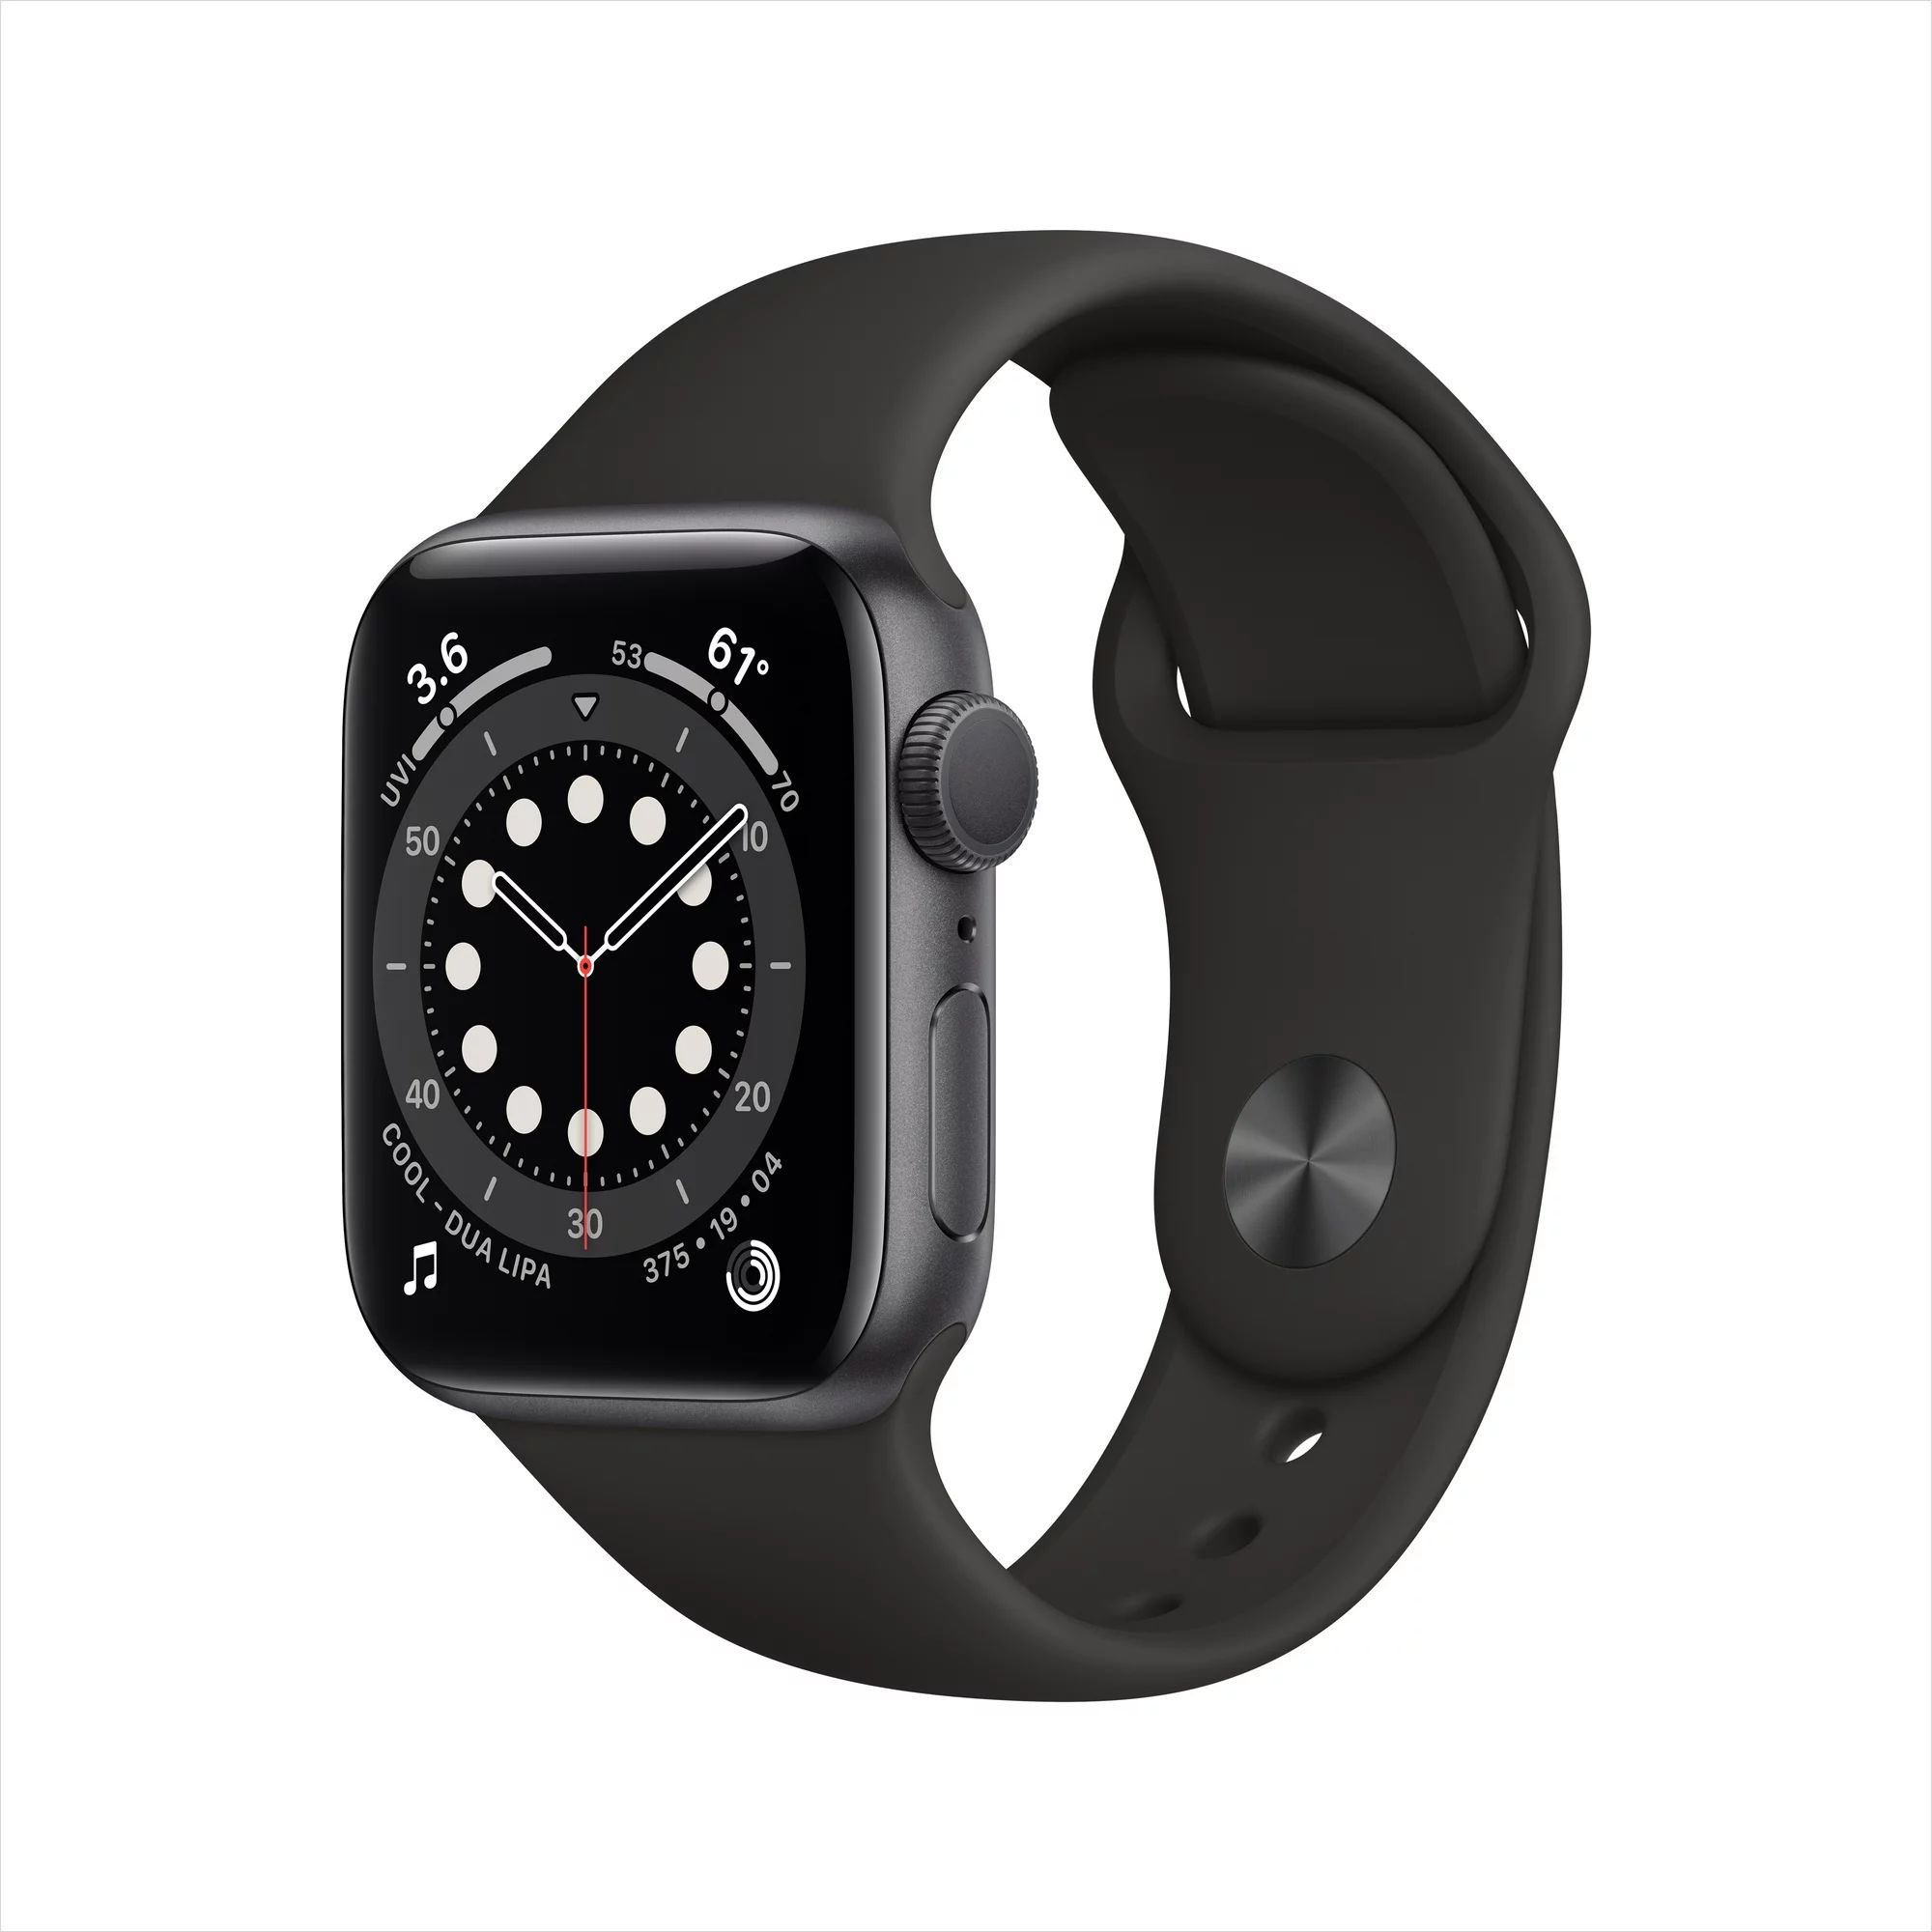 Apple Watch Series 6 GPS, 40mm Space Gray Aluminum Case with Black Sport Band - Regular | Walmart (US)